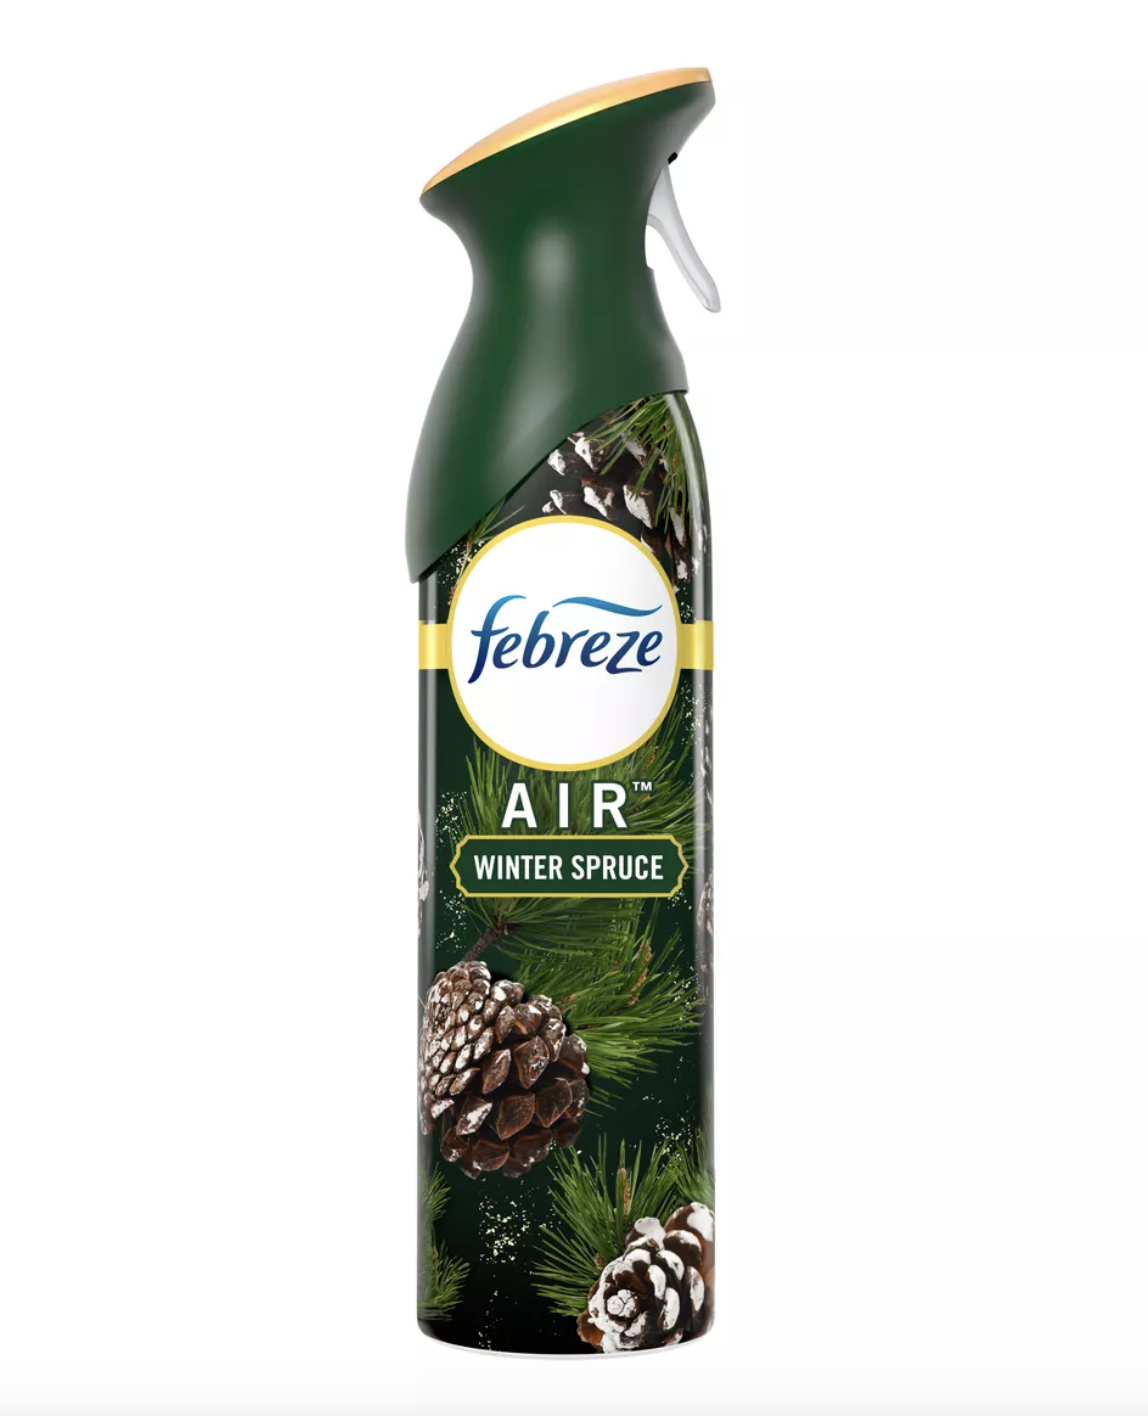 a bottle of febreeze air freshener